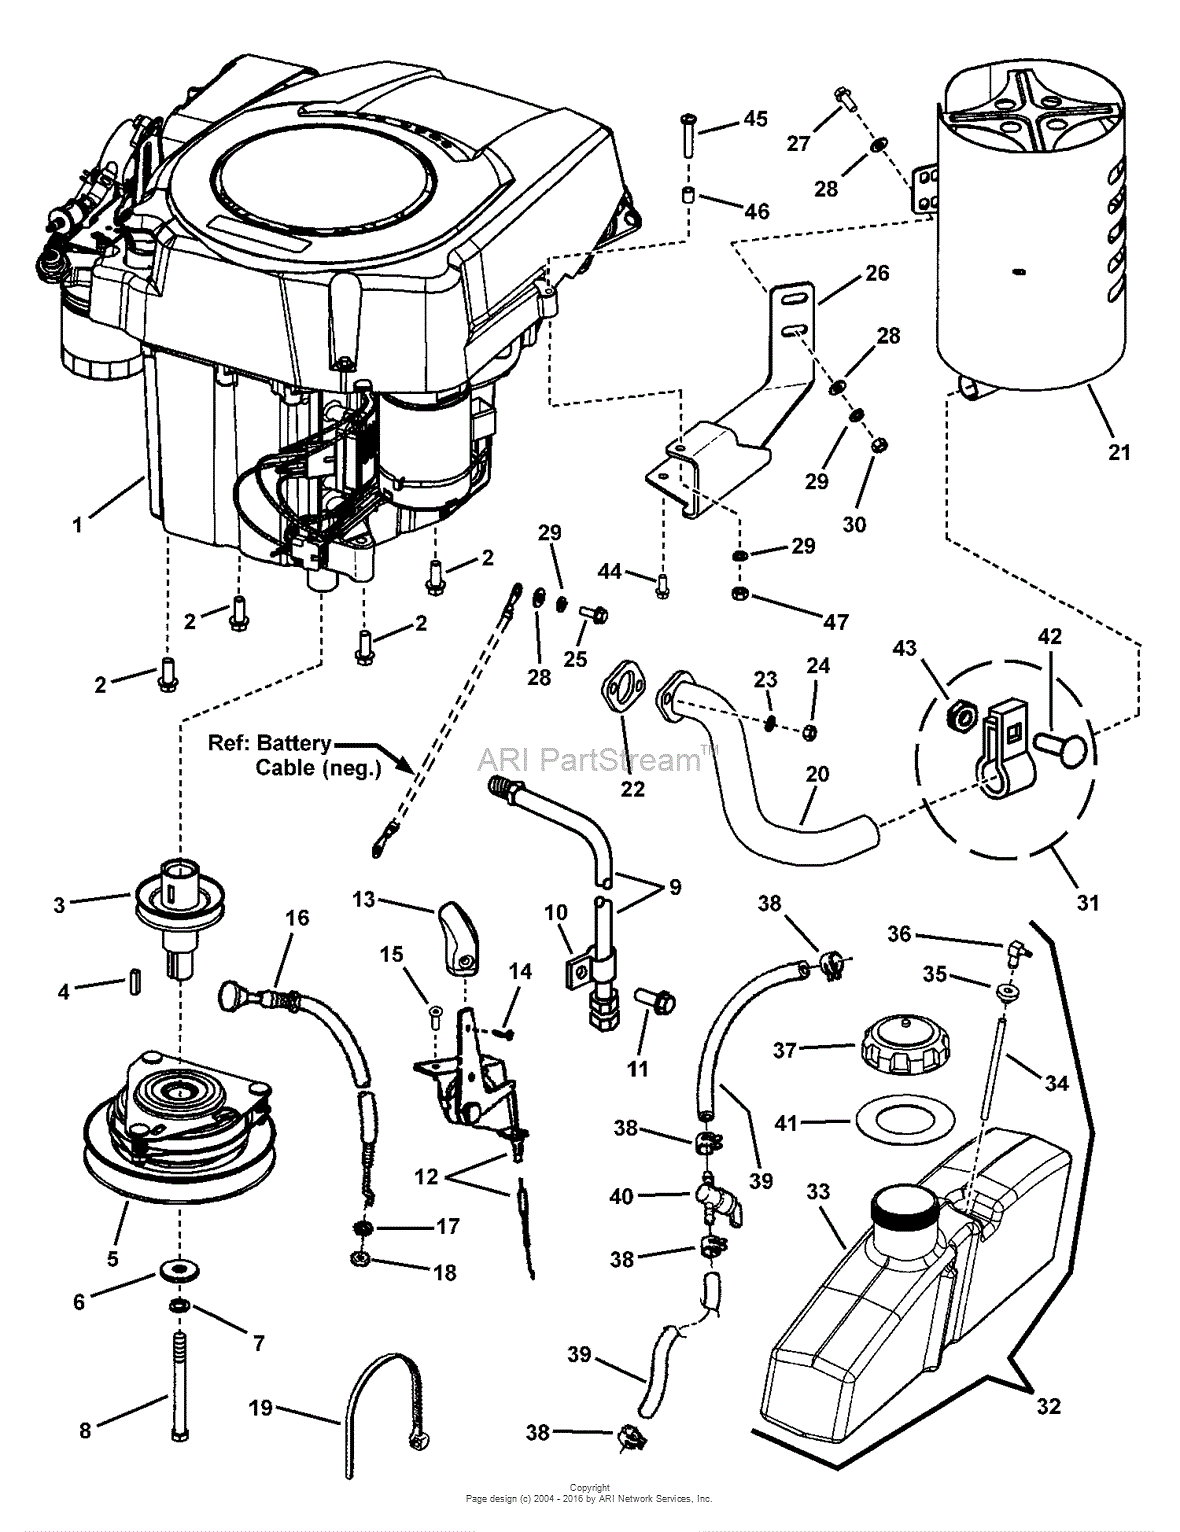 Kohler Courage Engine Parts Diagram